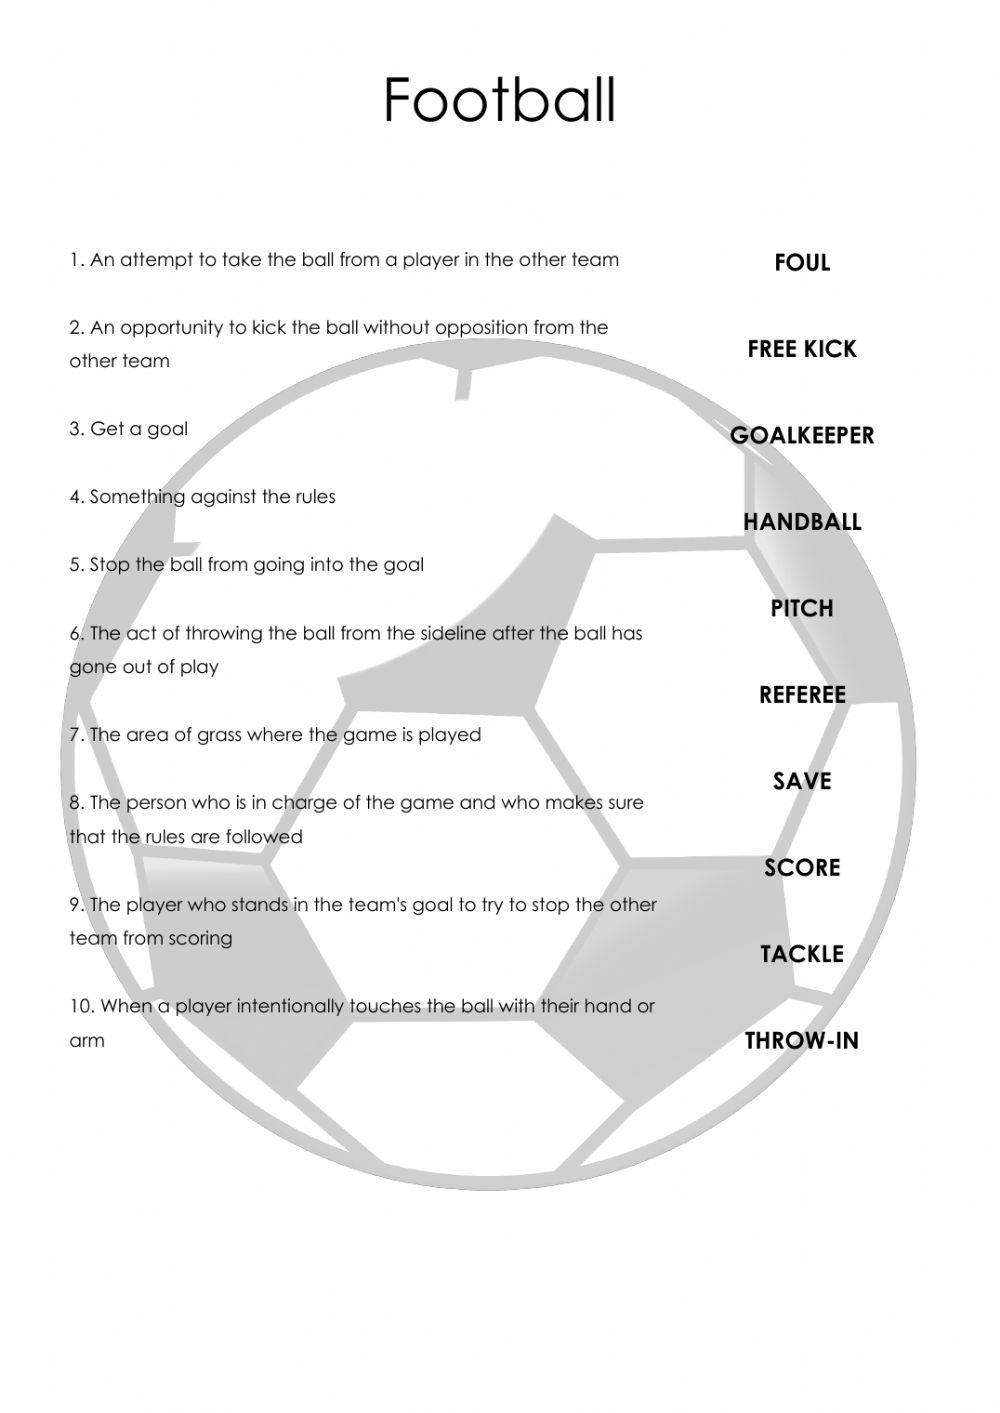 Football rules